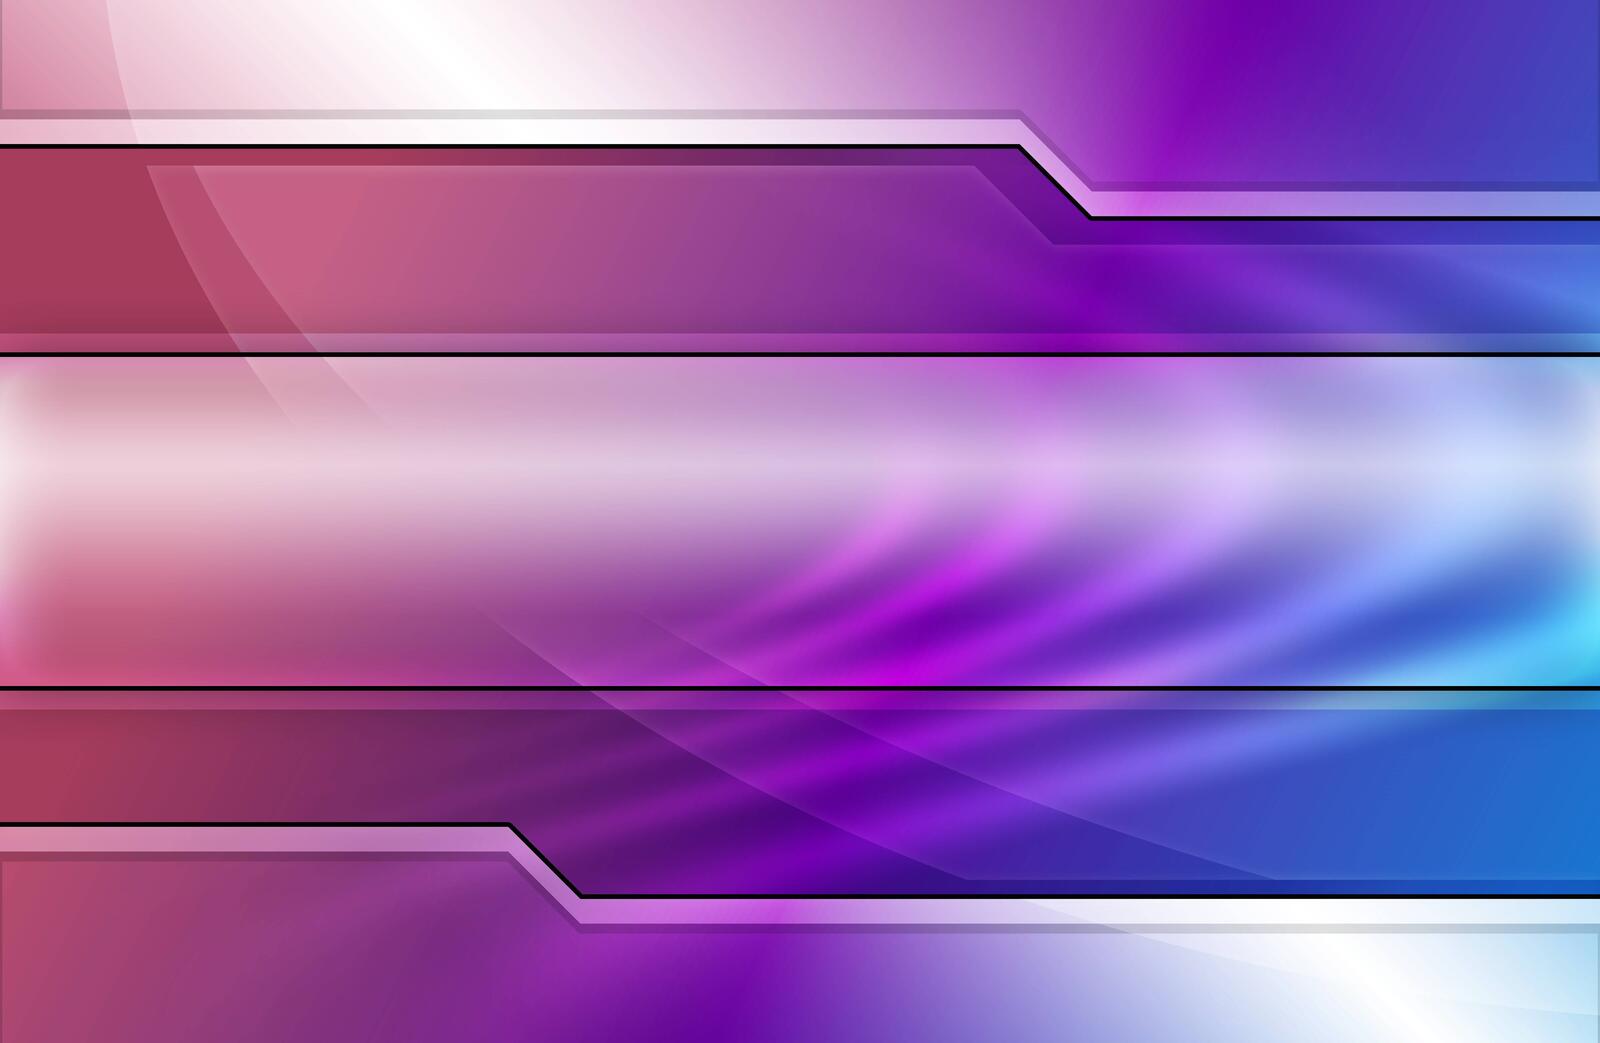 Wallpapers violet art rendering on the desktop